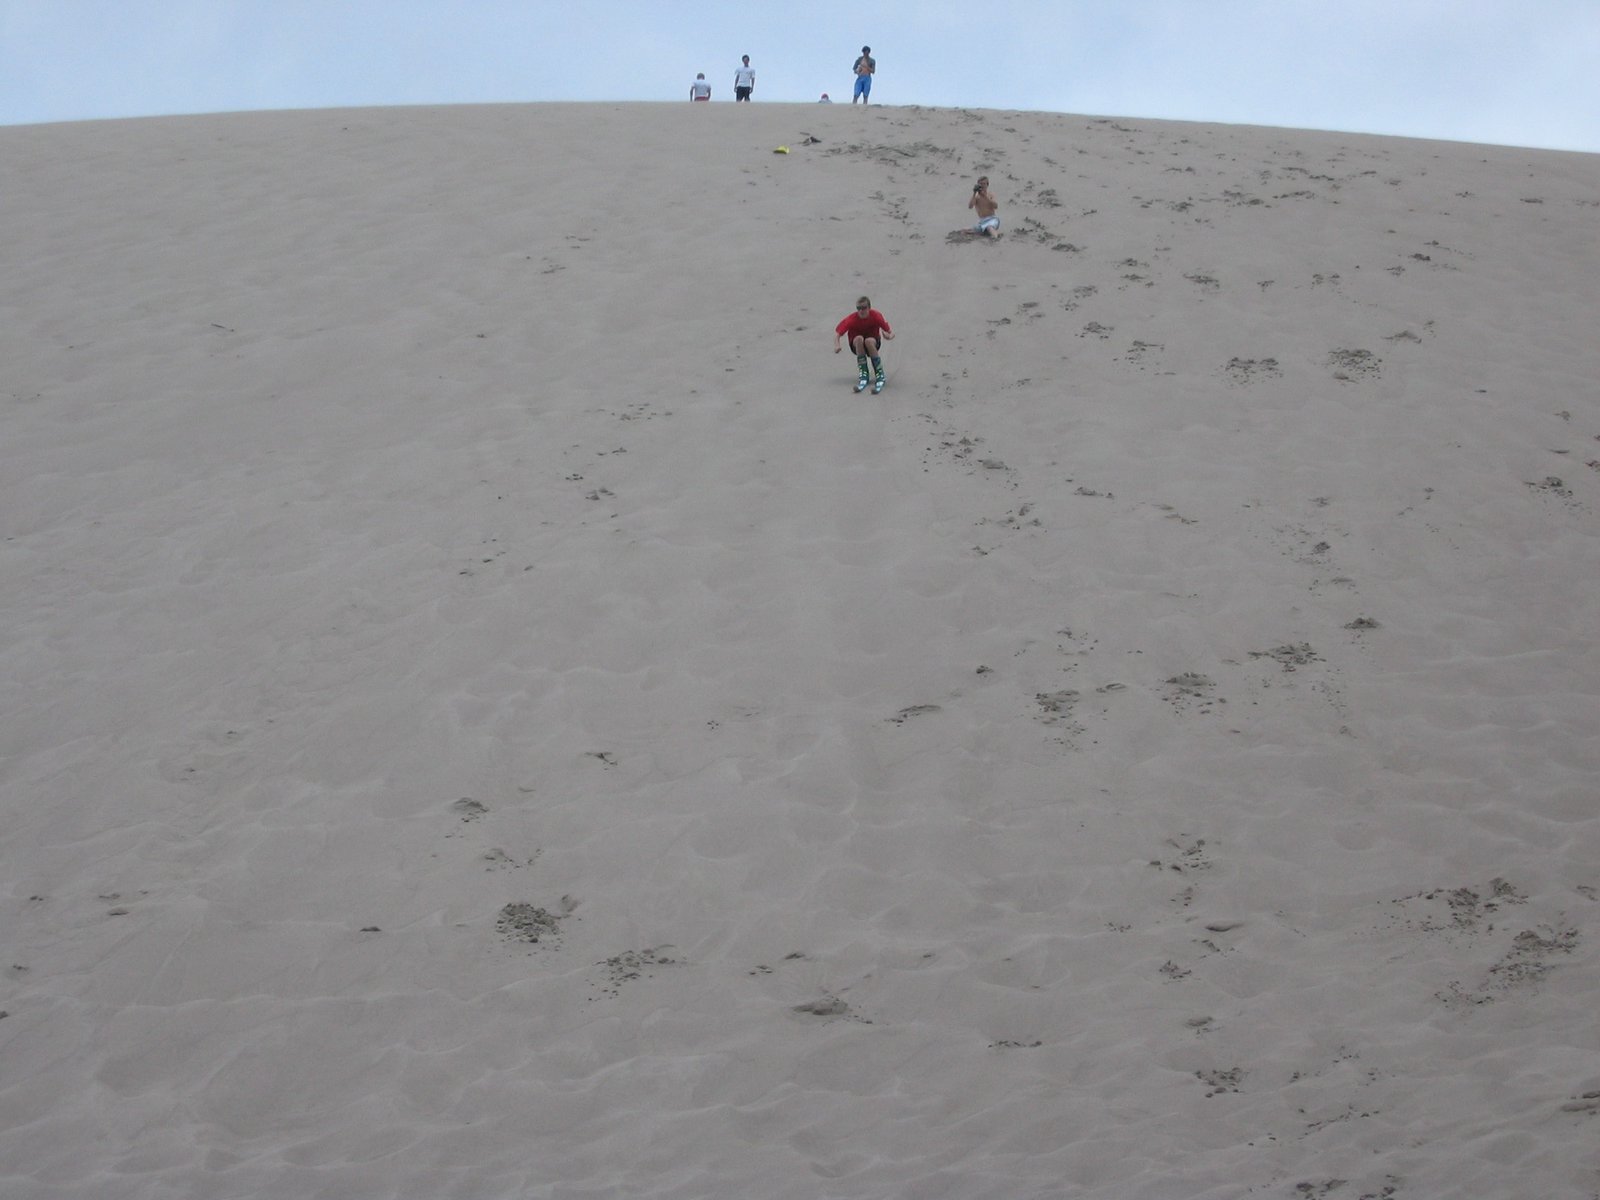 Shredding sand